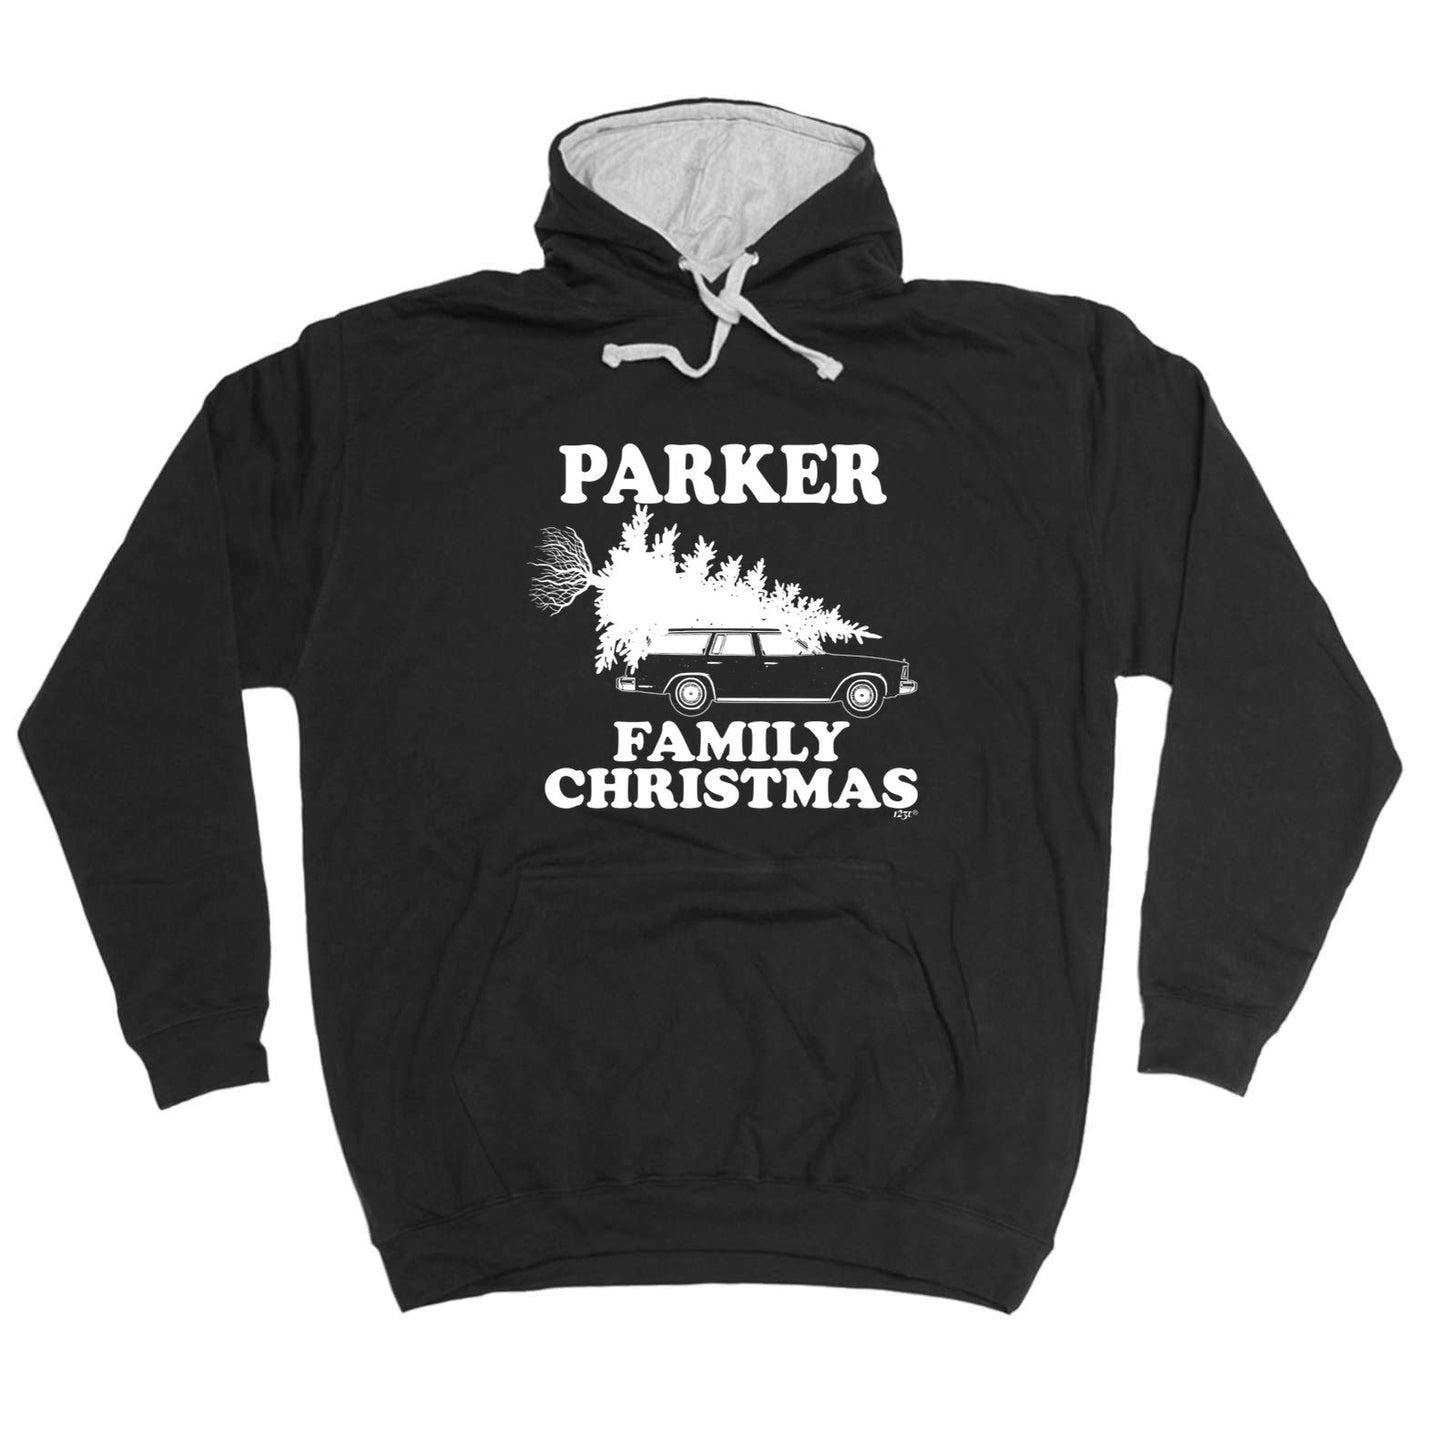 Family Christmas Parker - Xmas Novelty Hoodies Hoodie